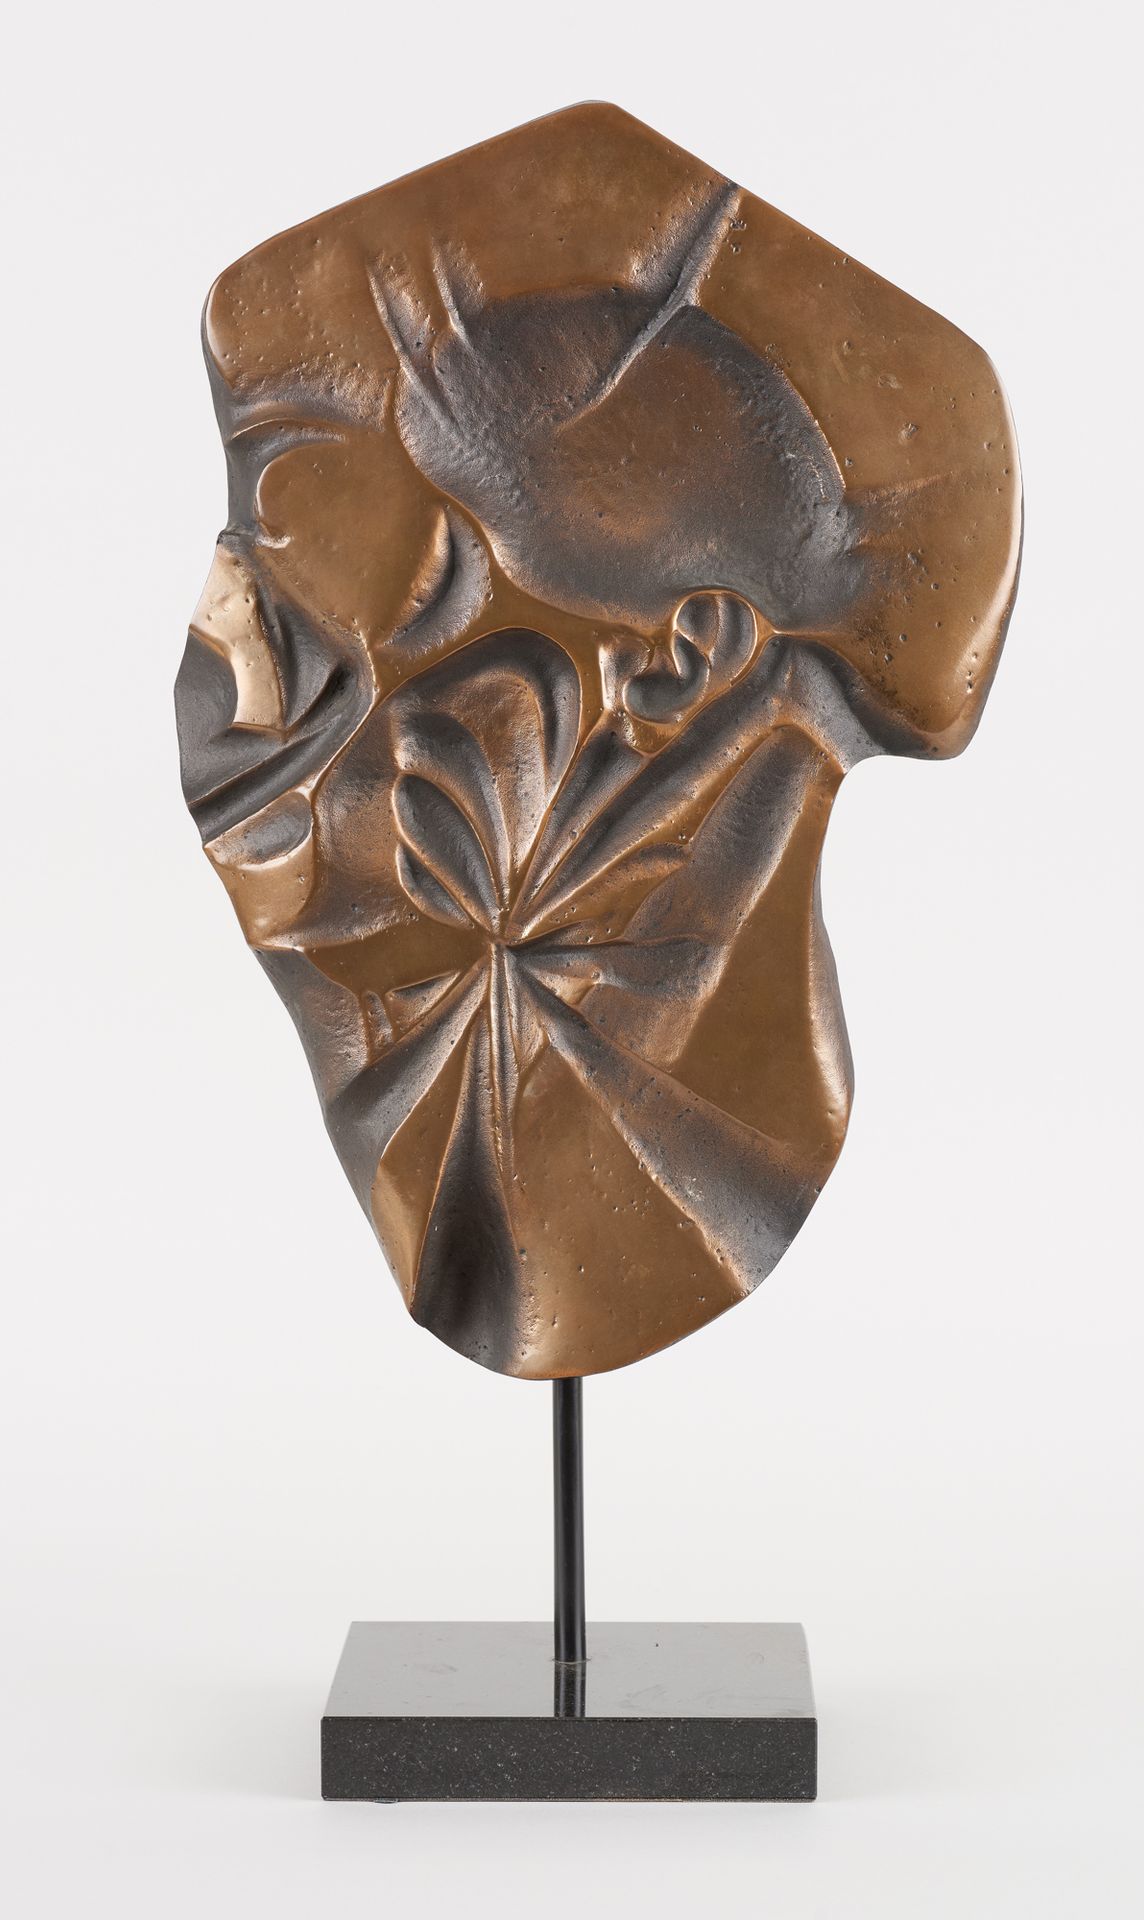 Marc LAFFINEUR École belge (1940) Skulptur aus Bronze: Profil.

Signiert und dat&hellip;